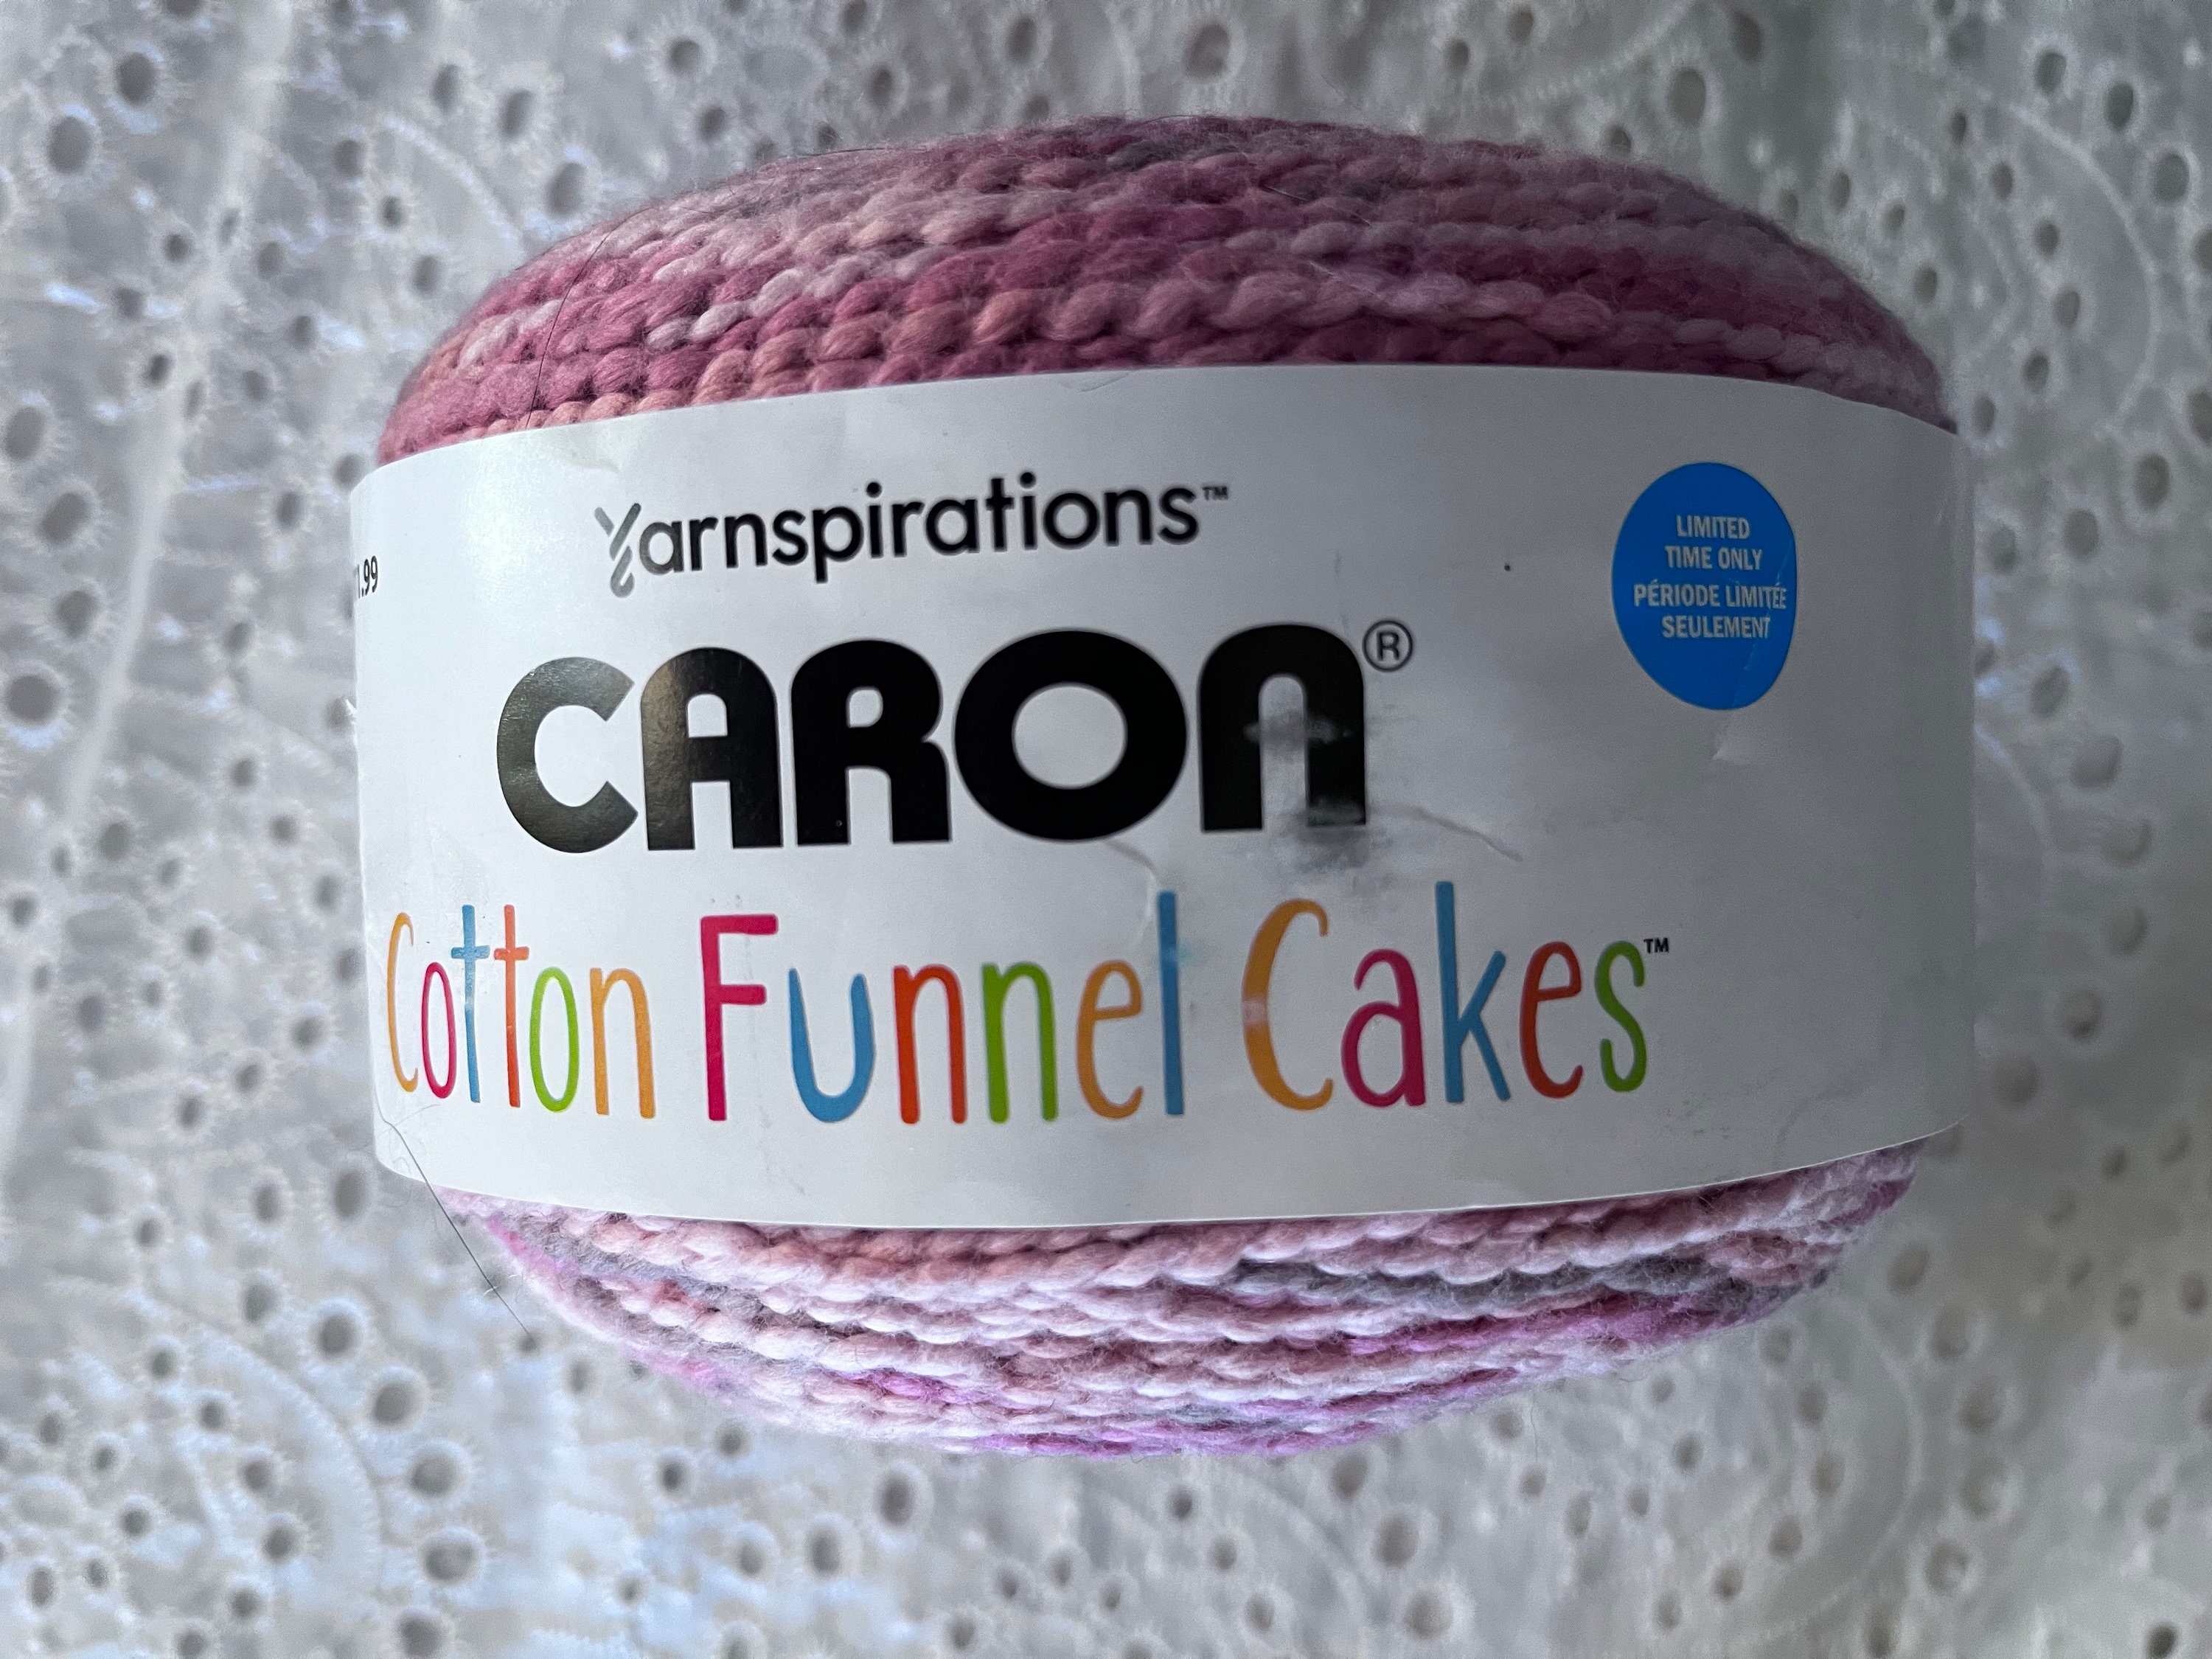 Caron Cloud Cakes Magenta Madness Polyester Knitting & Crochet Yarn